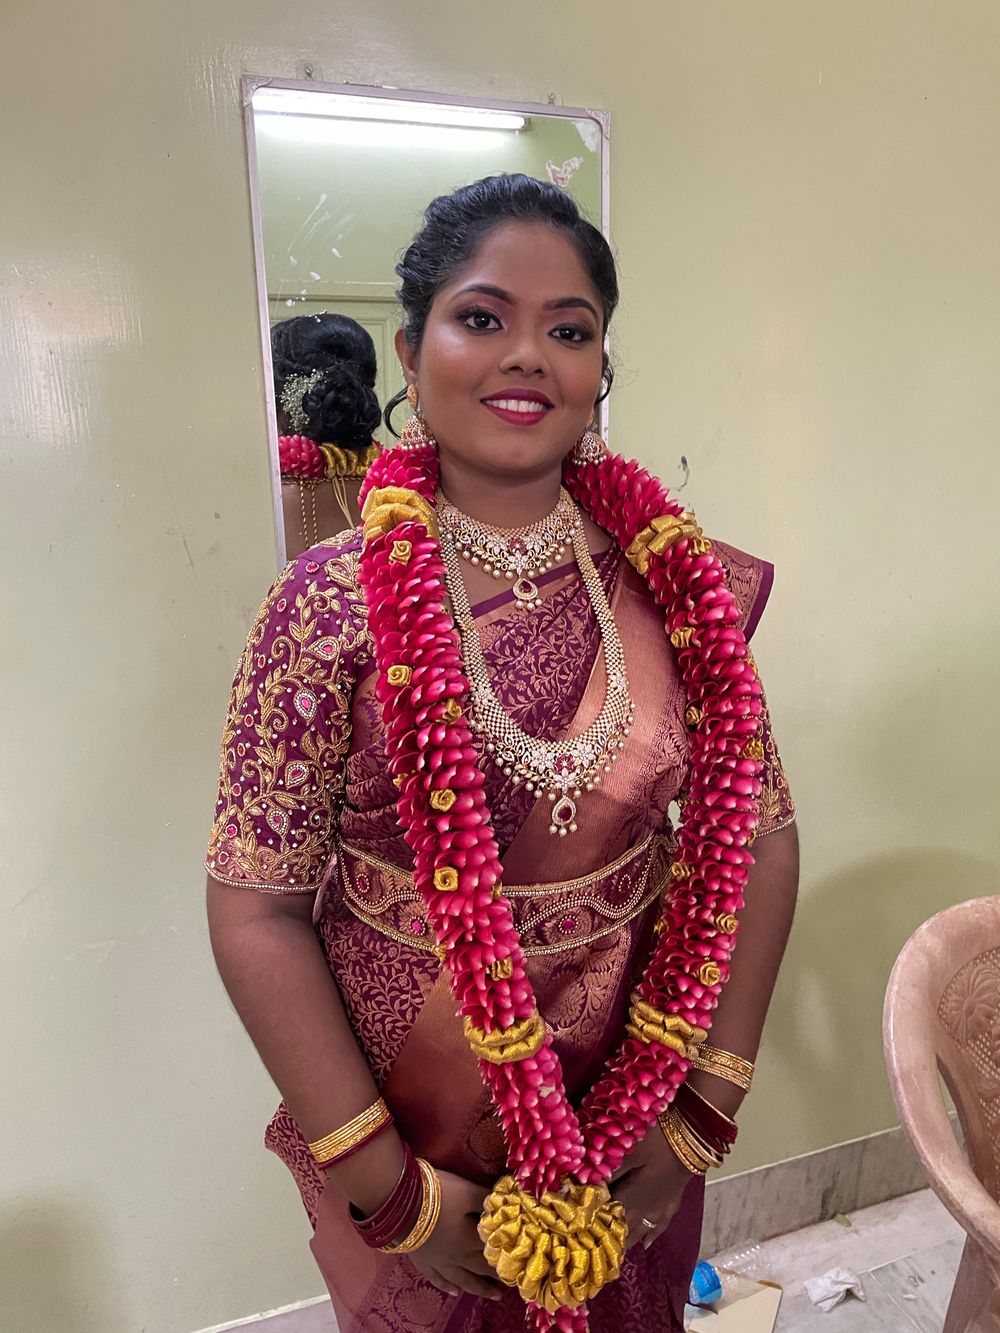 Photo From Christian Wedding - By Priya's Bridal Makeover